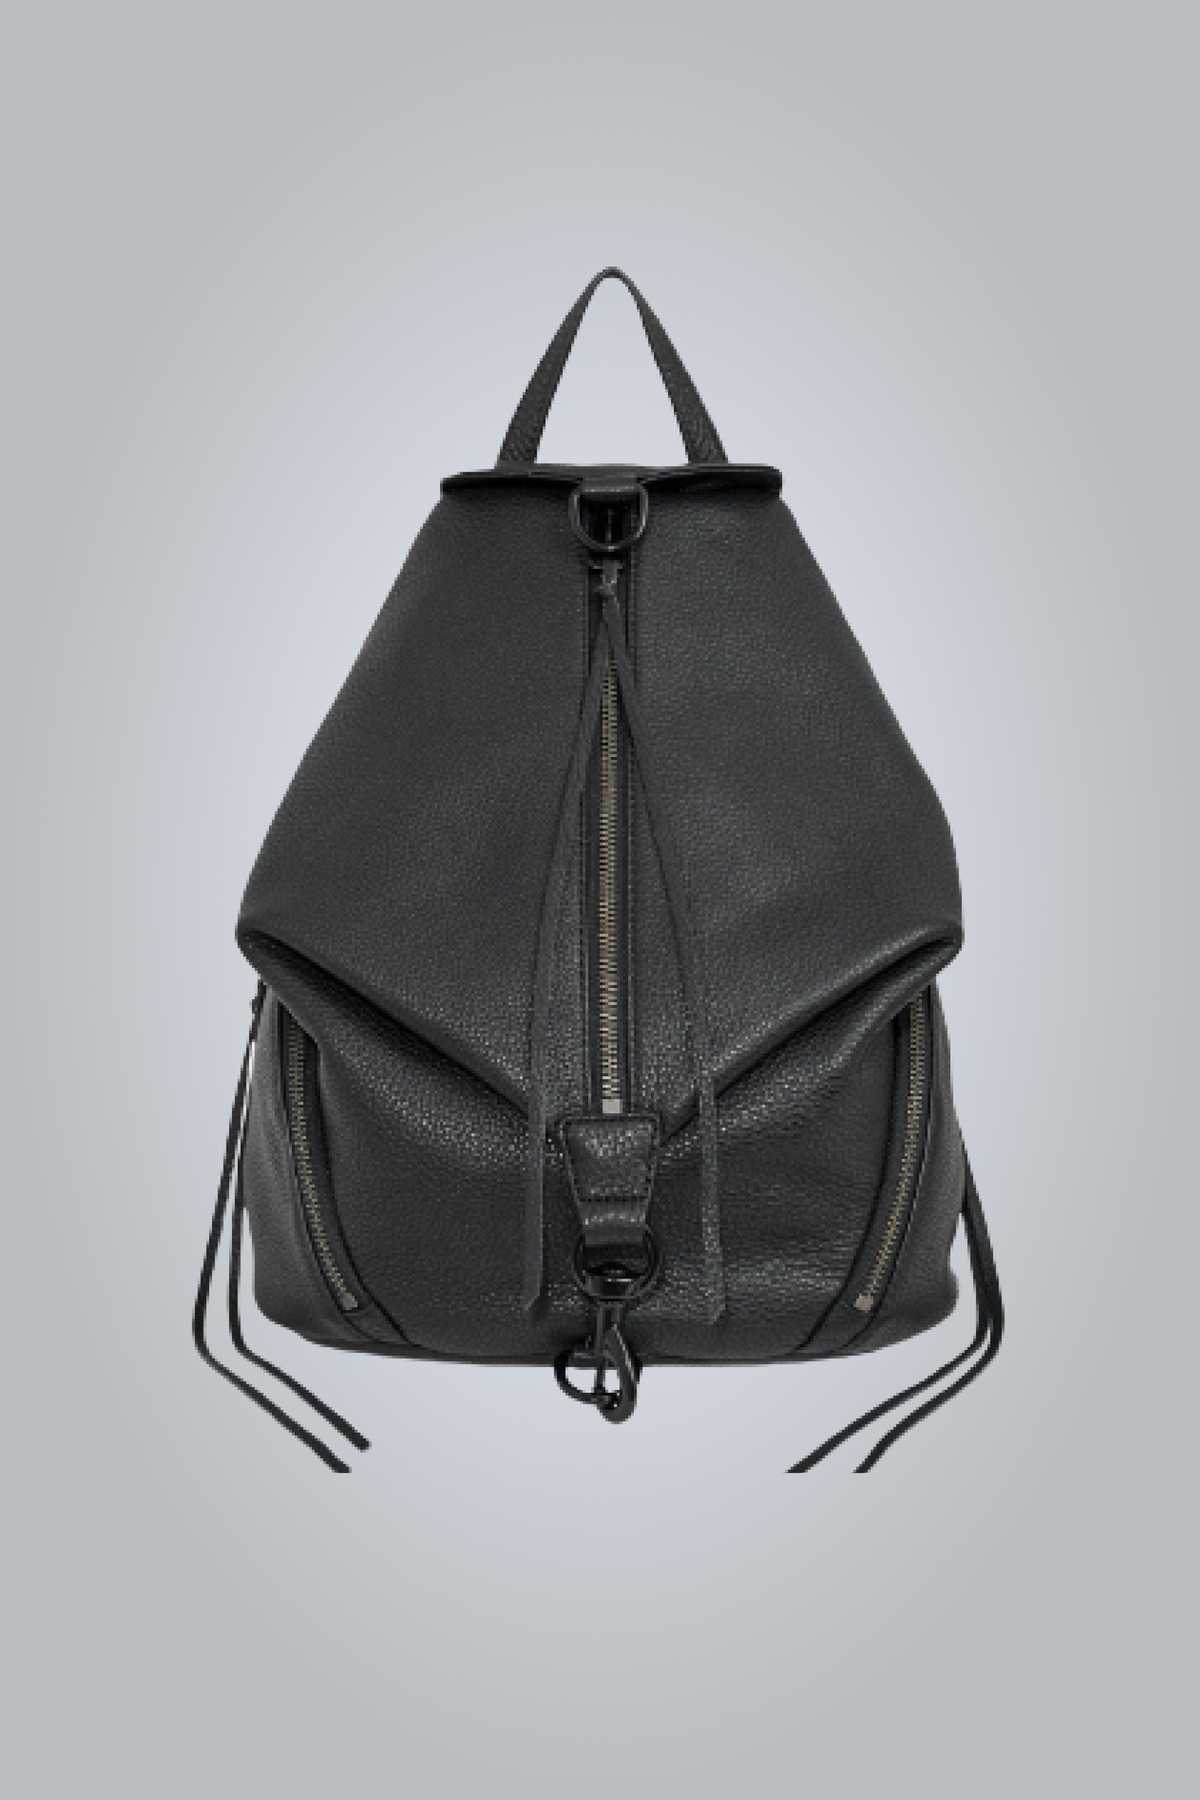 Julian | Backpack | Black Shellac Hardware | Black Leather